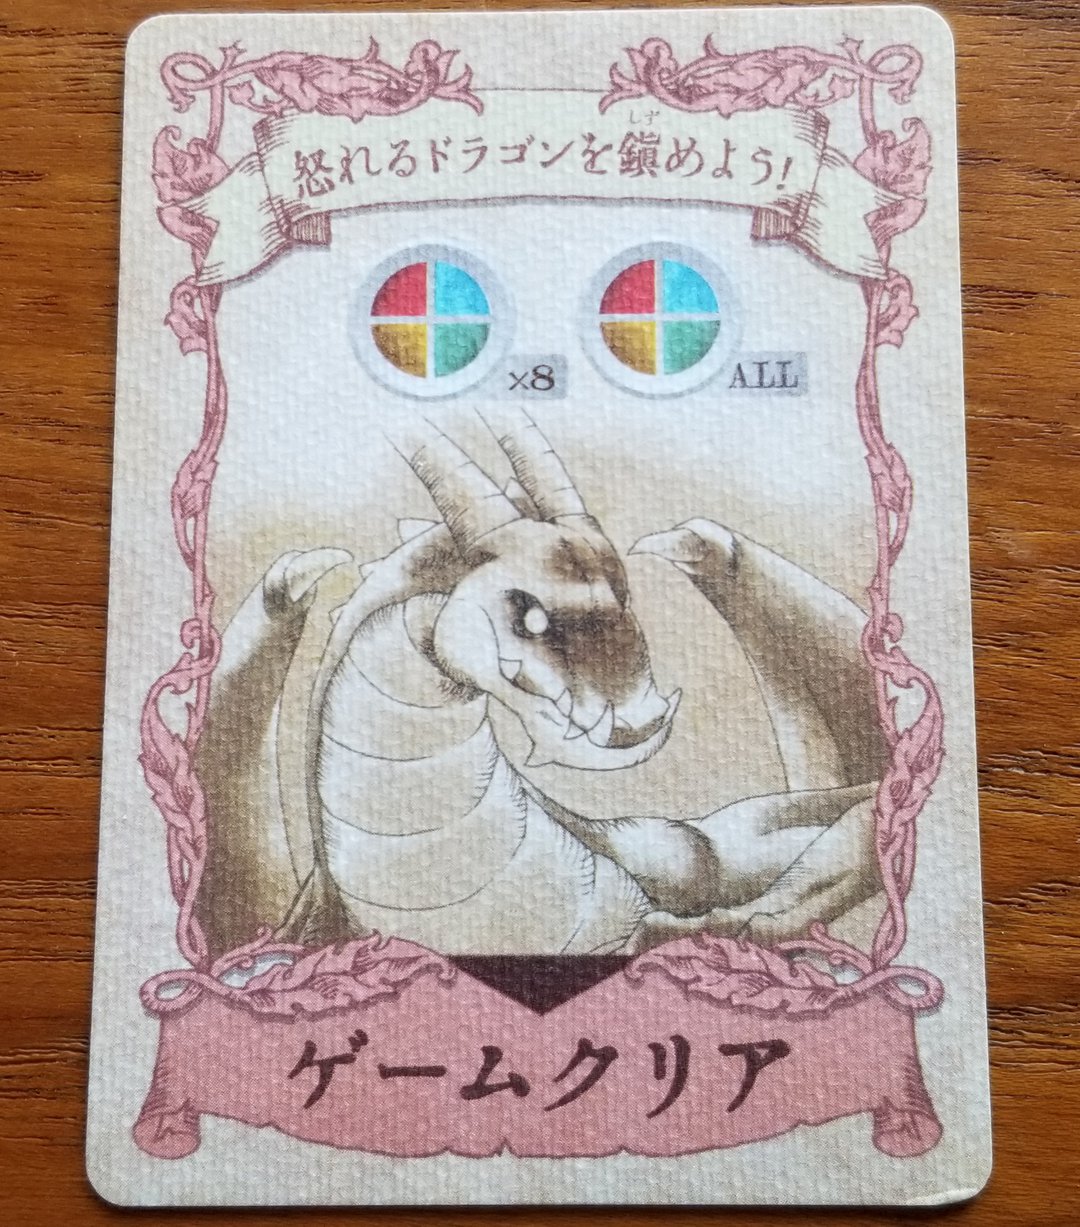 hiktorune dragon card